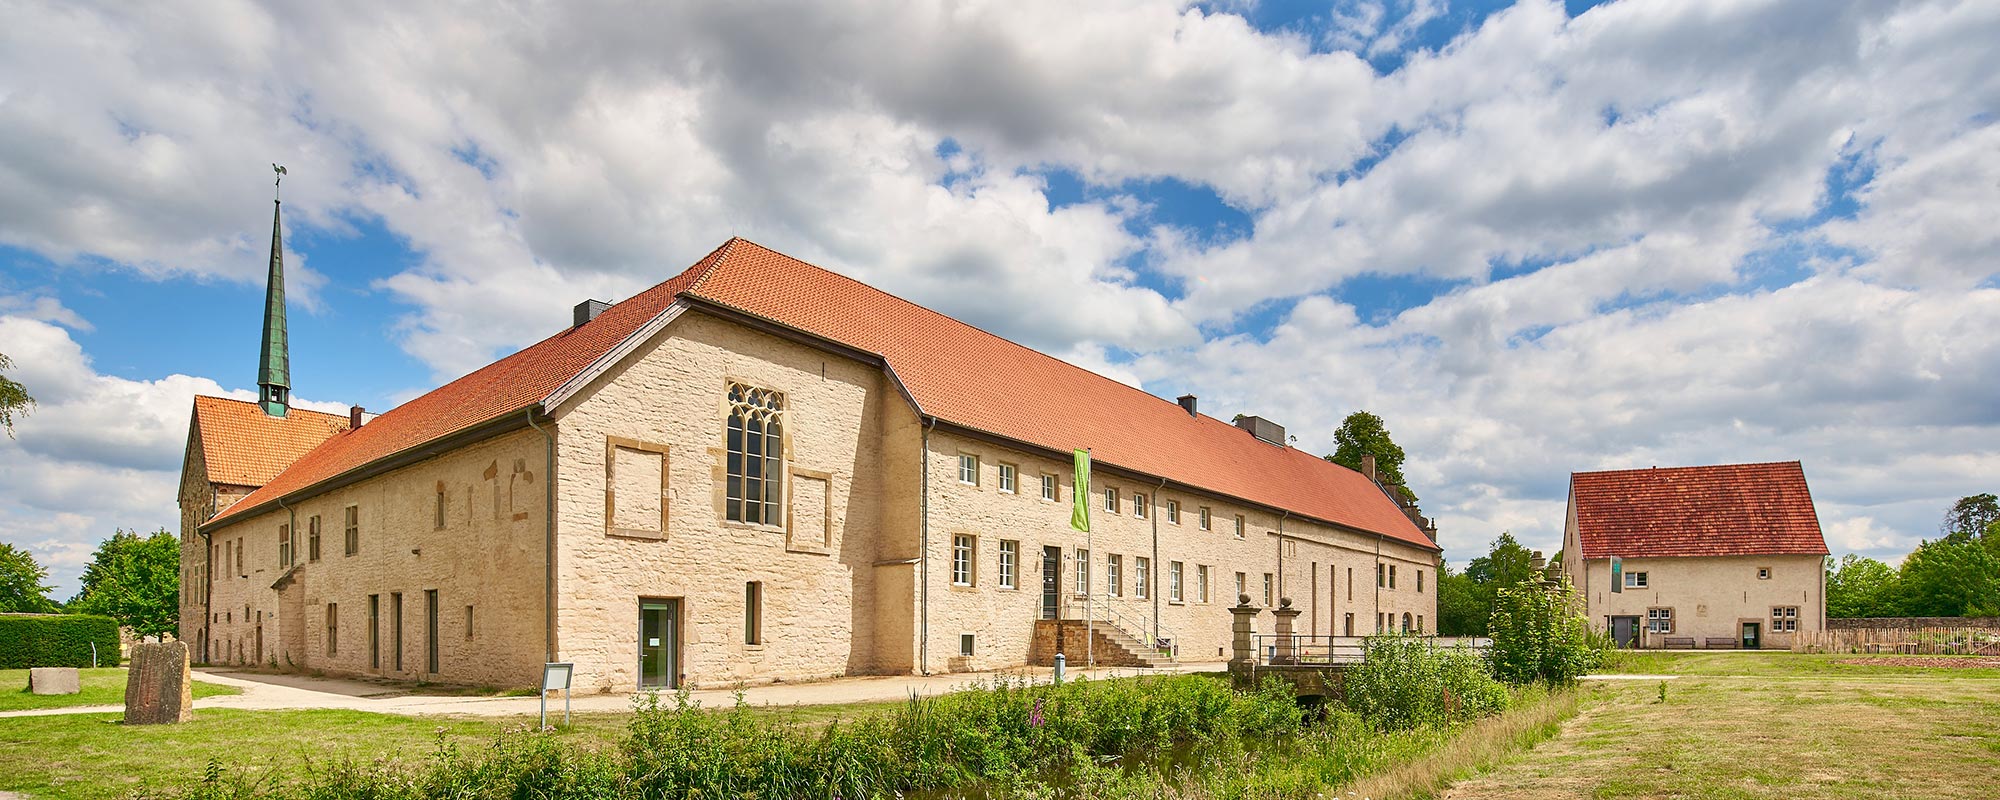 DA Kunsthaus Kloster Gravenhorst